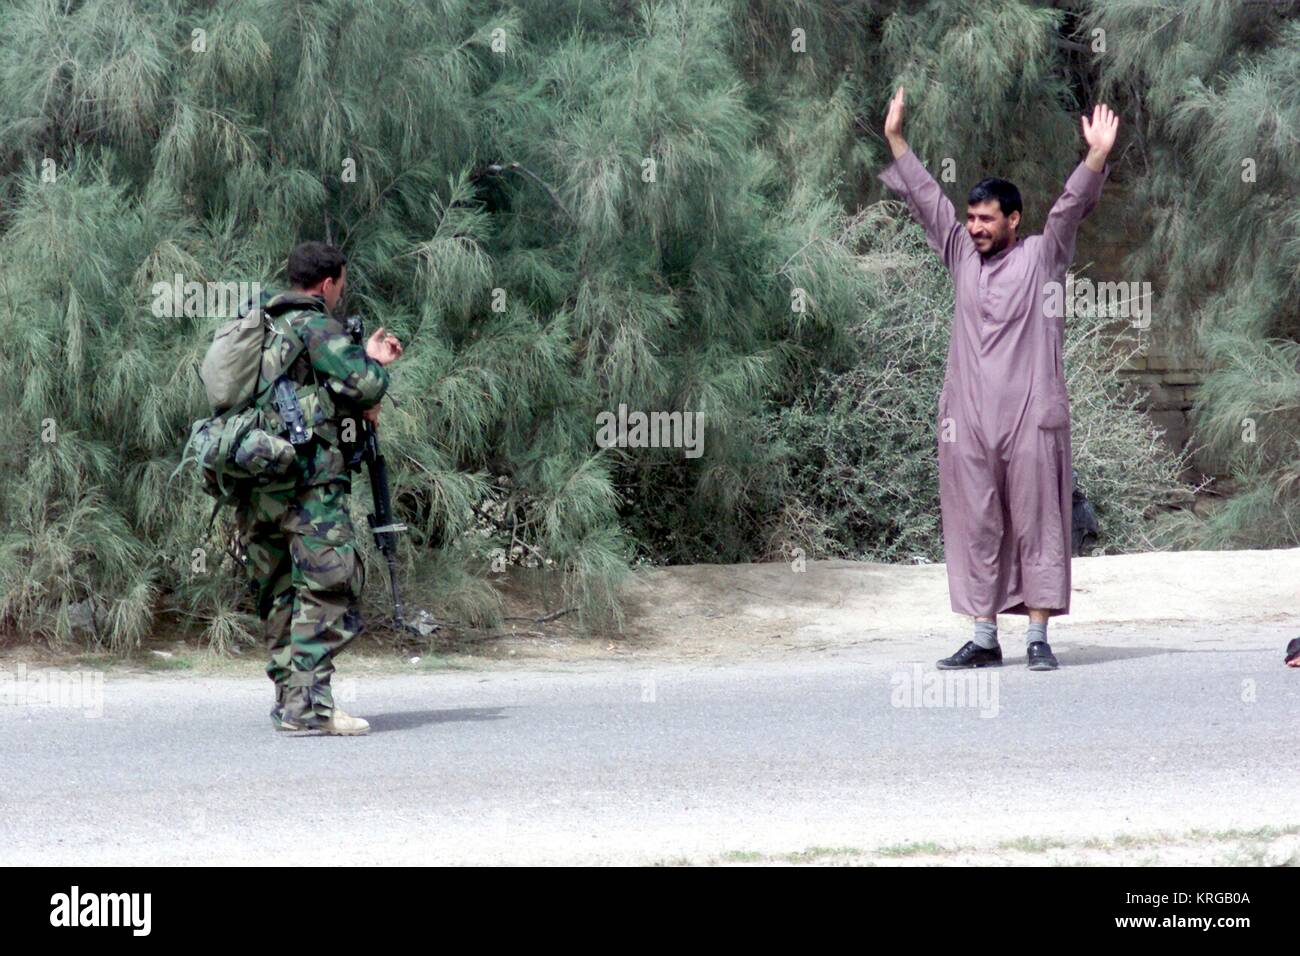 An Iraqi citizen raises his hands in surrender to a U.S. Marine soldier during Operation Iraqi Freedom October 25, 2003 near Umm Qasr, Iraq. Stock Photo